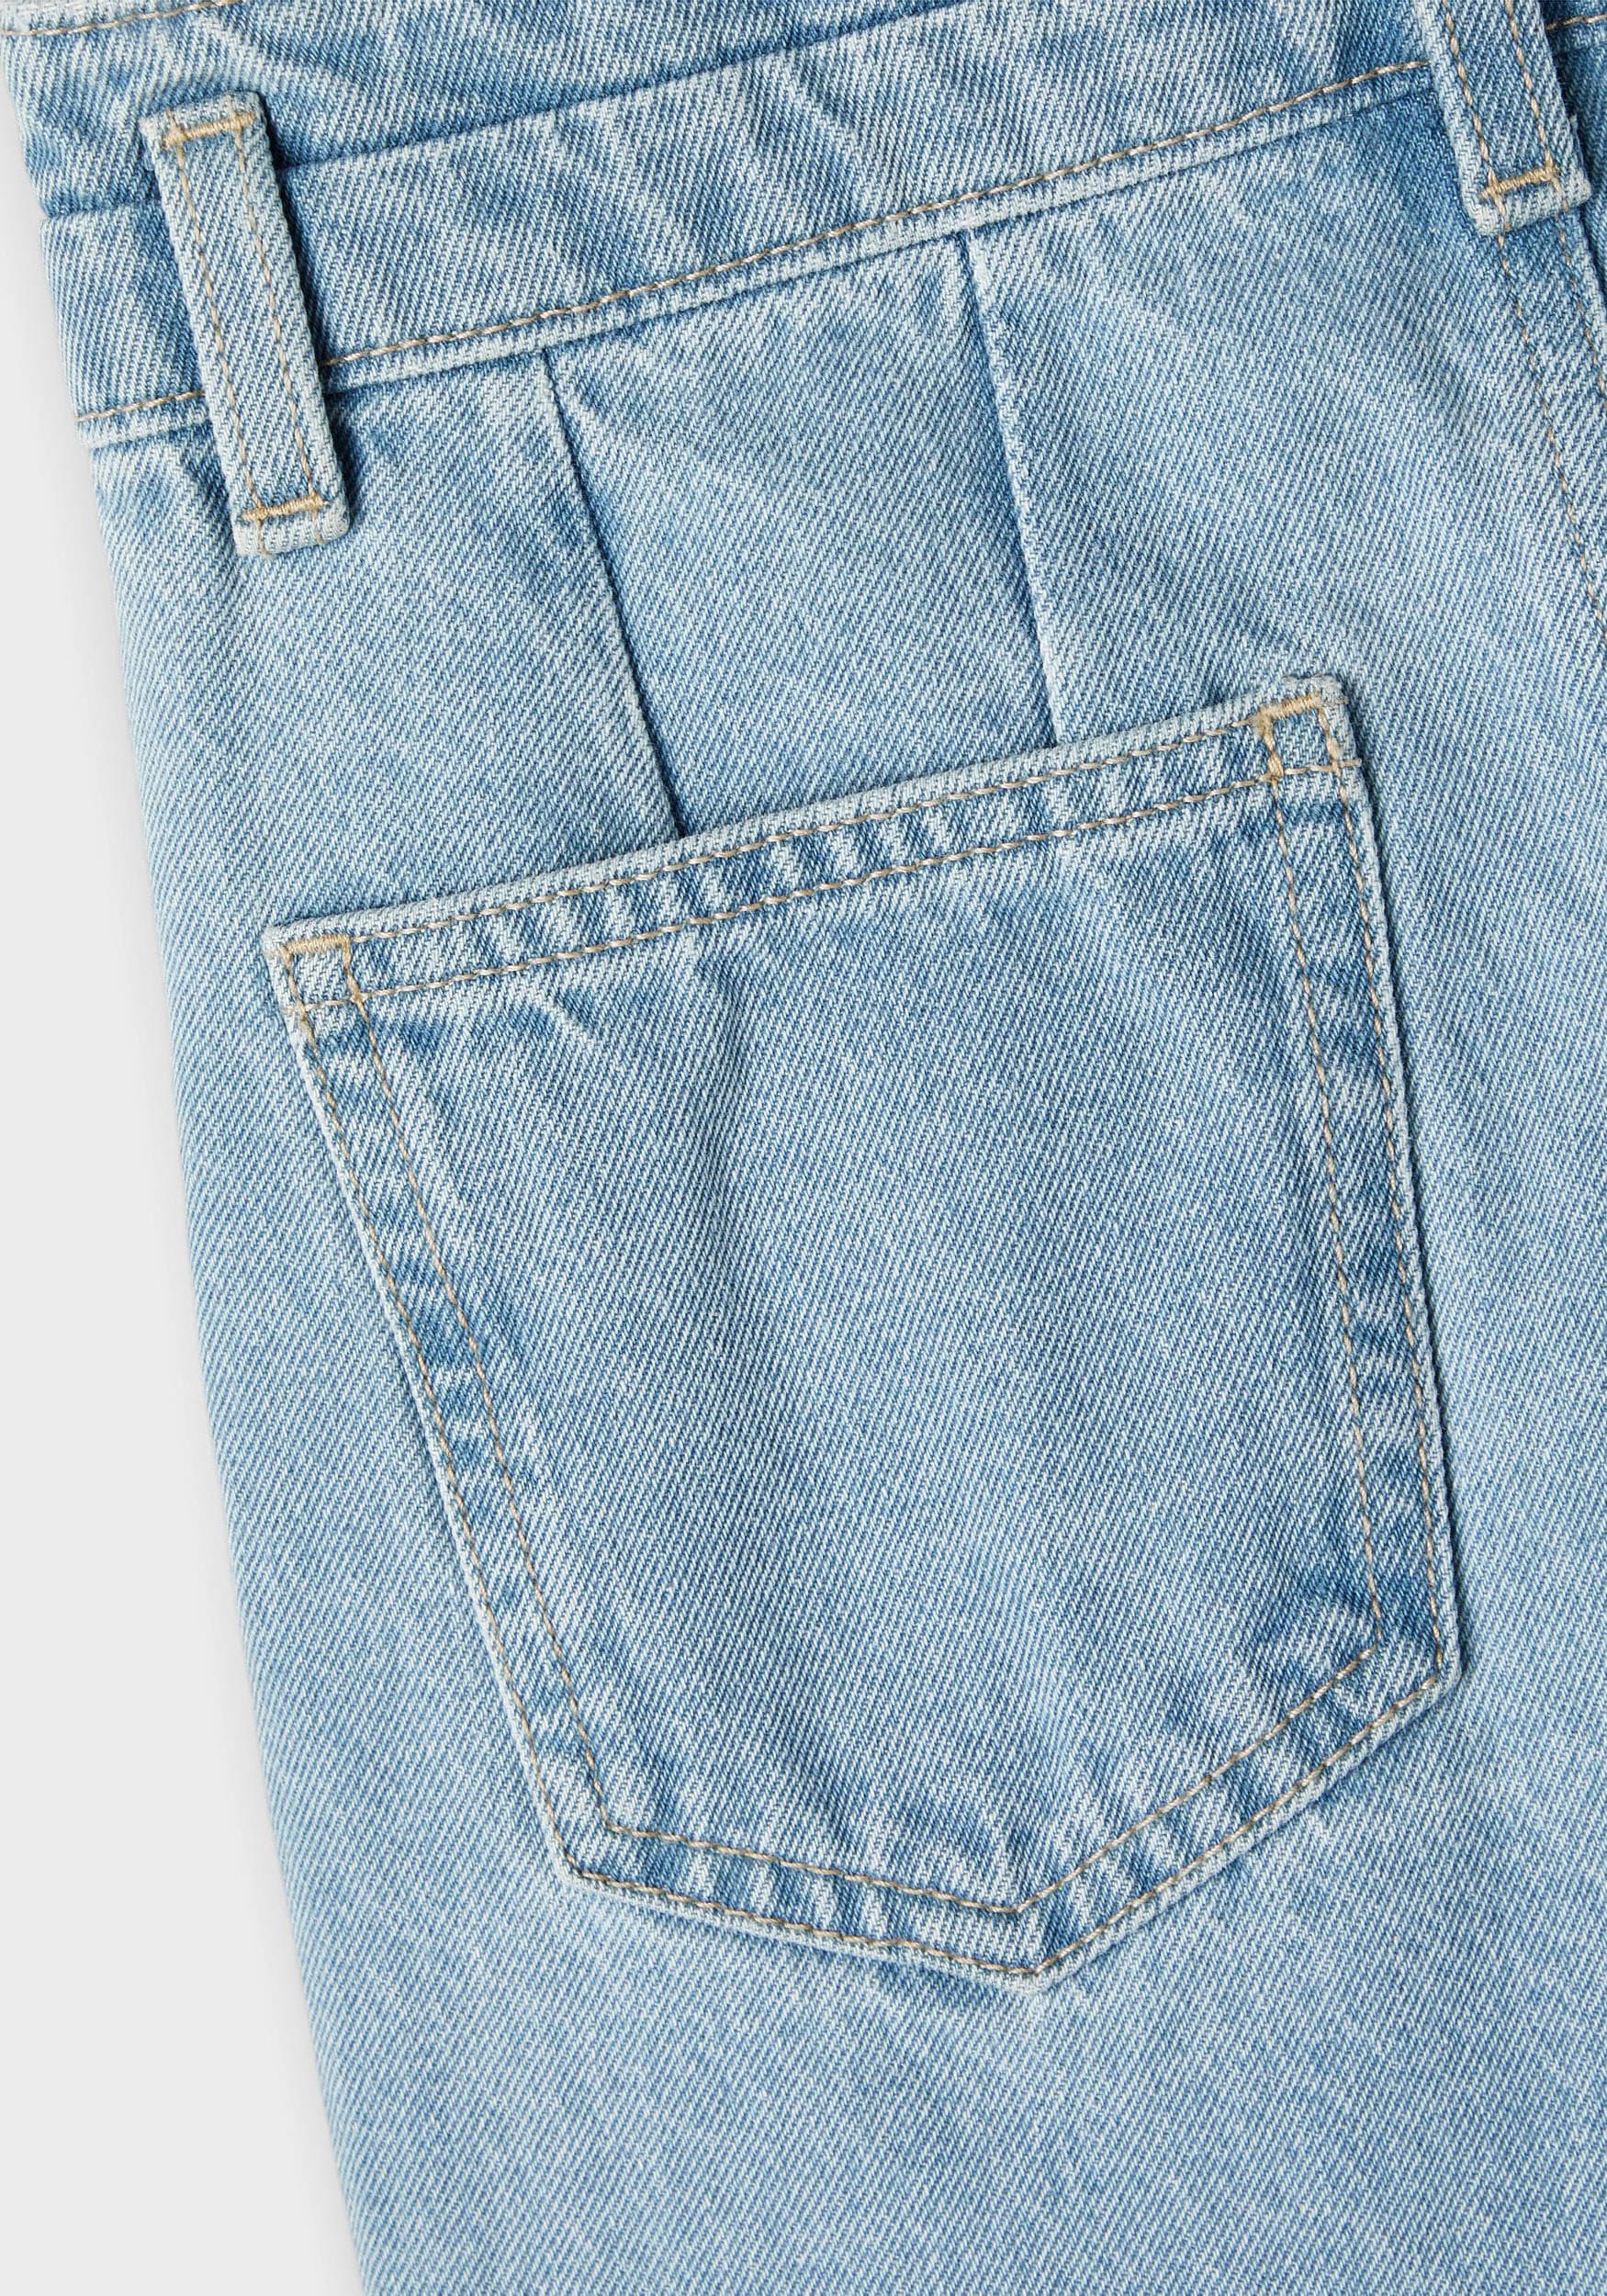 Name It High-waist-Jeans »NKFBELLA HW MOM AN JEANS 1092-DO NOOS« kaufen